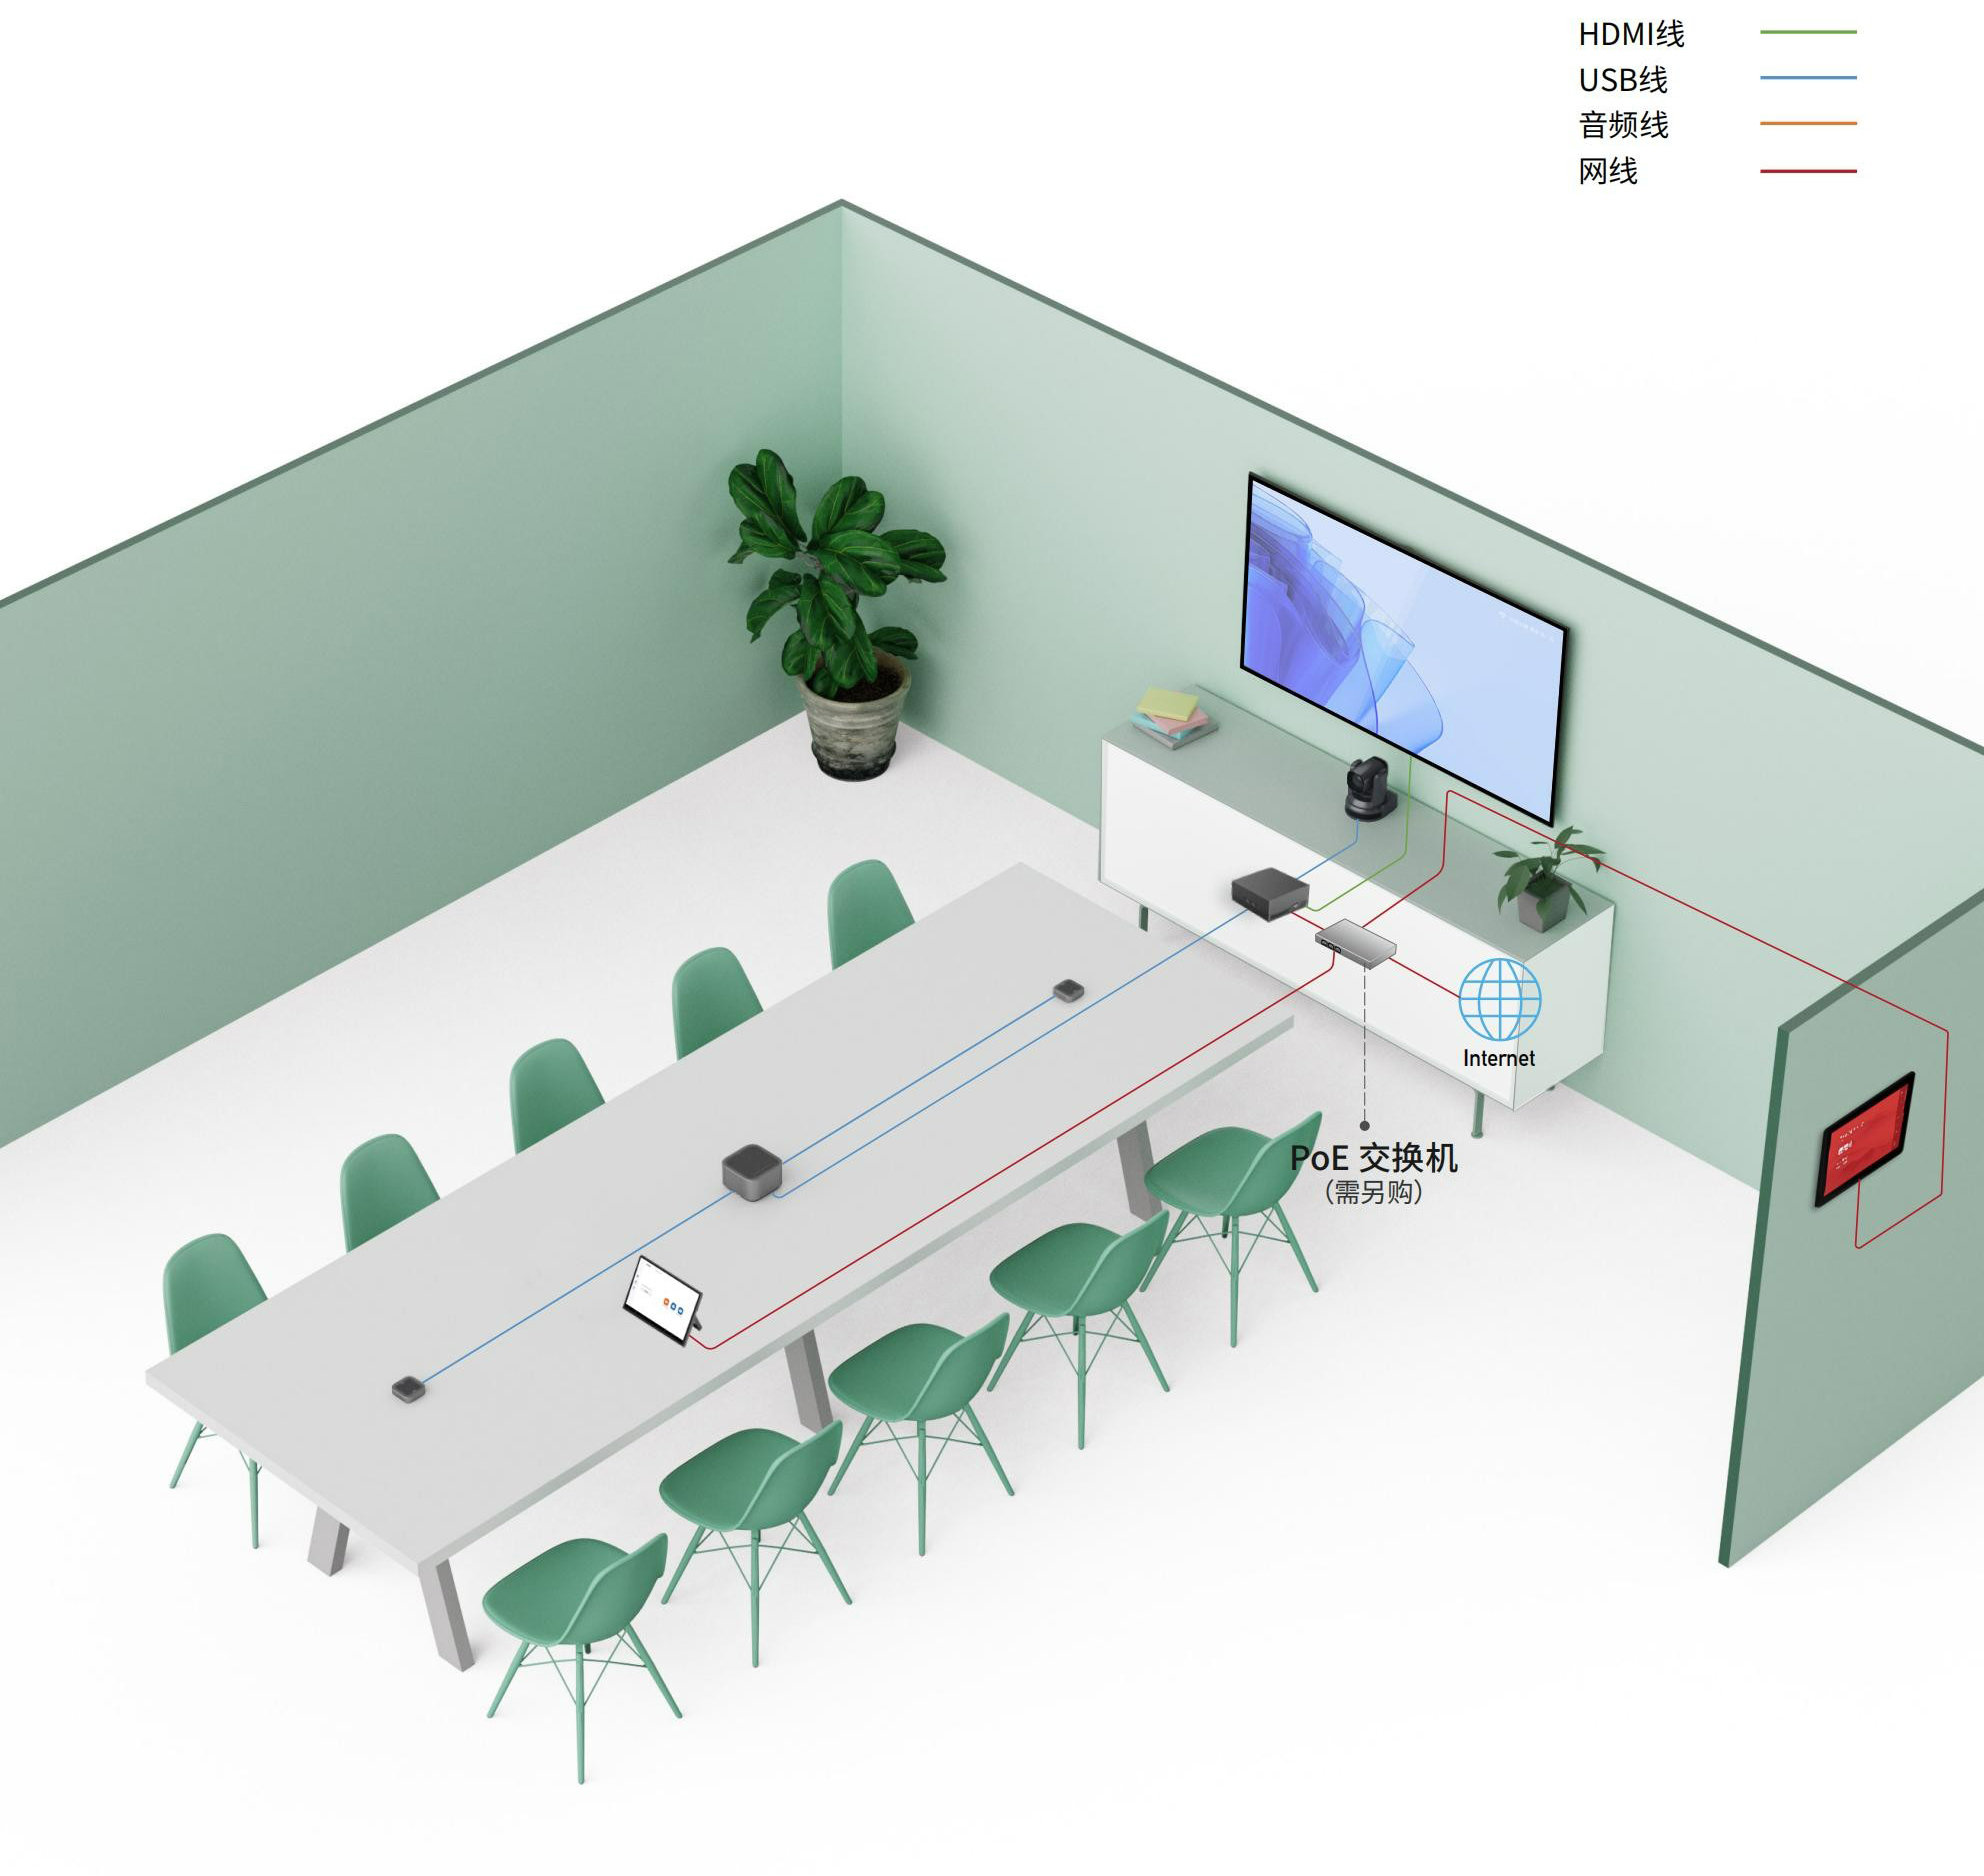 7、VHD维海德中型会议室解决方案-会议室部署图.jpg